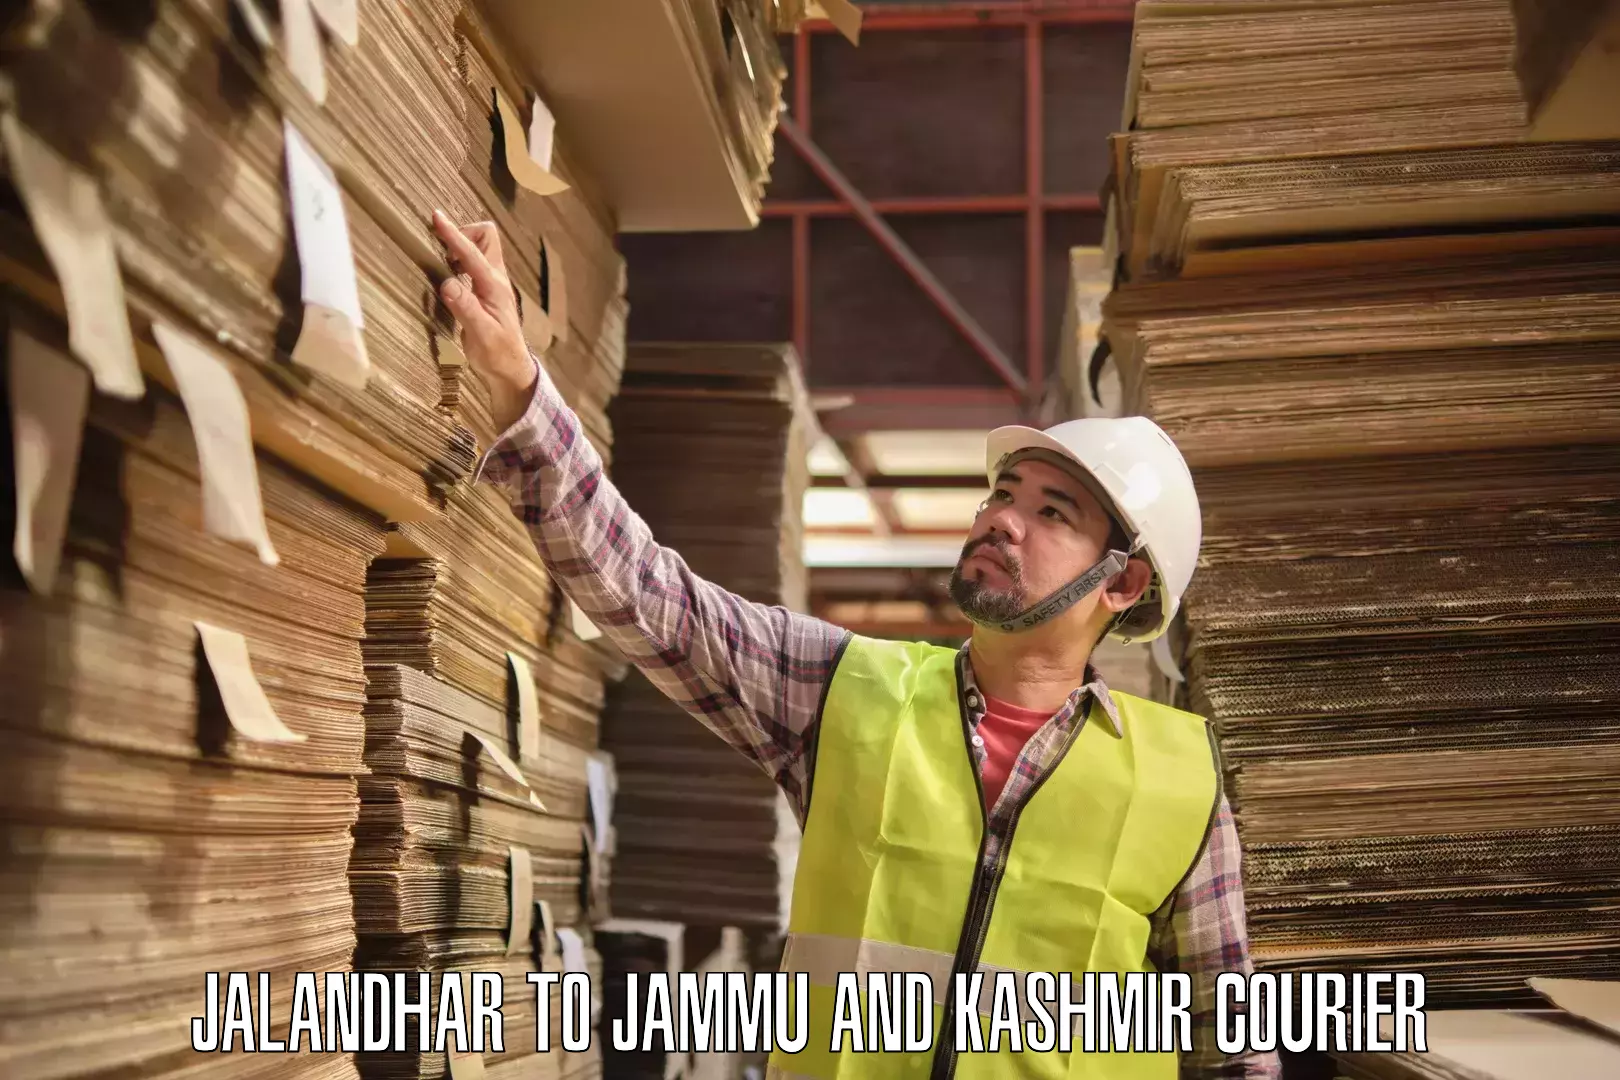 Sustainable shipping practices Jalandhar to Srinagar Kashmir